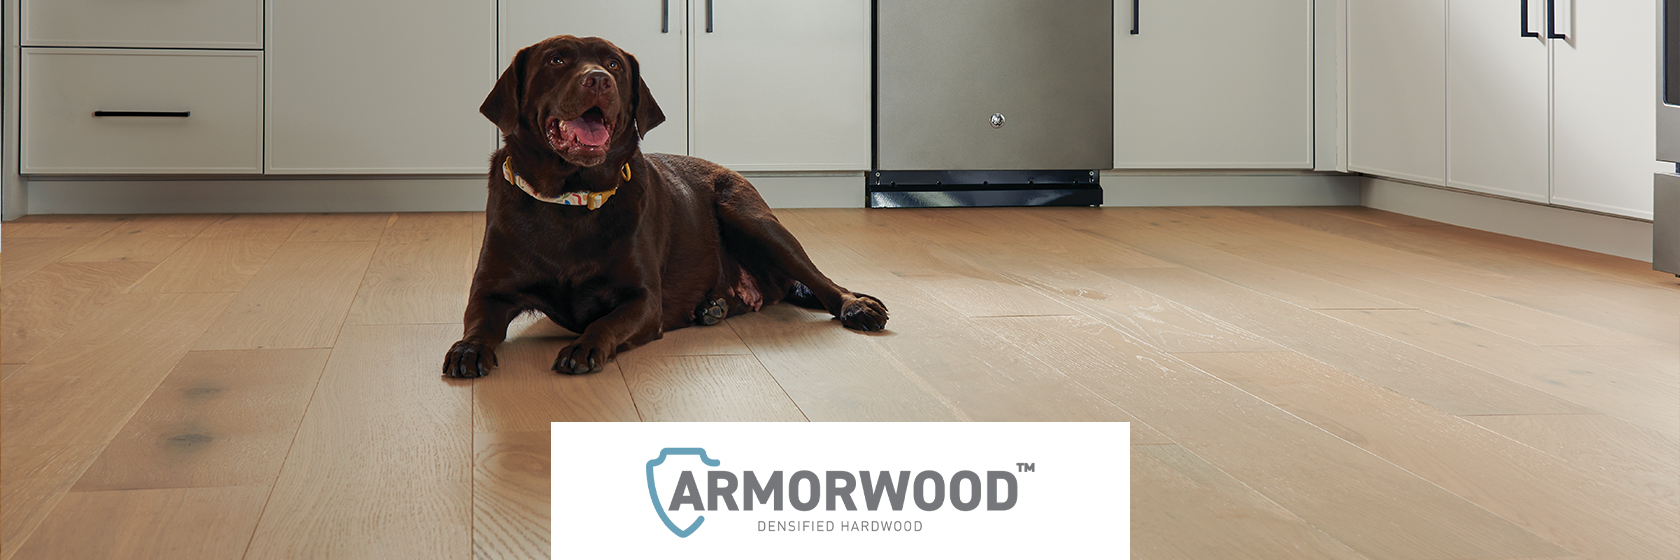 Dog lying on a kitchen floor showing ArmorWood dog-proof flooring